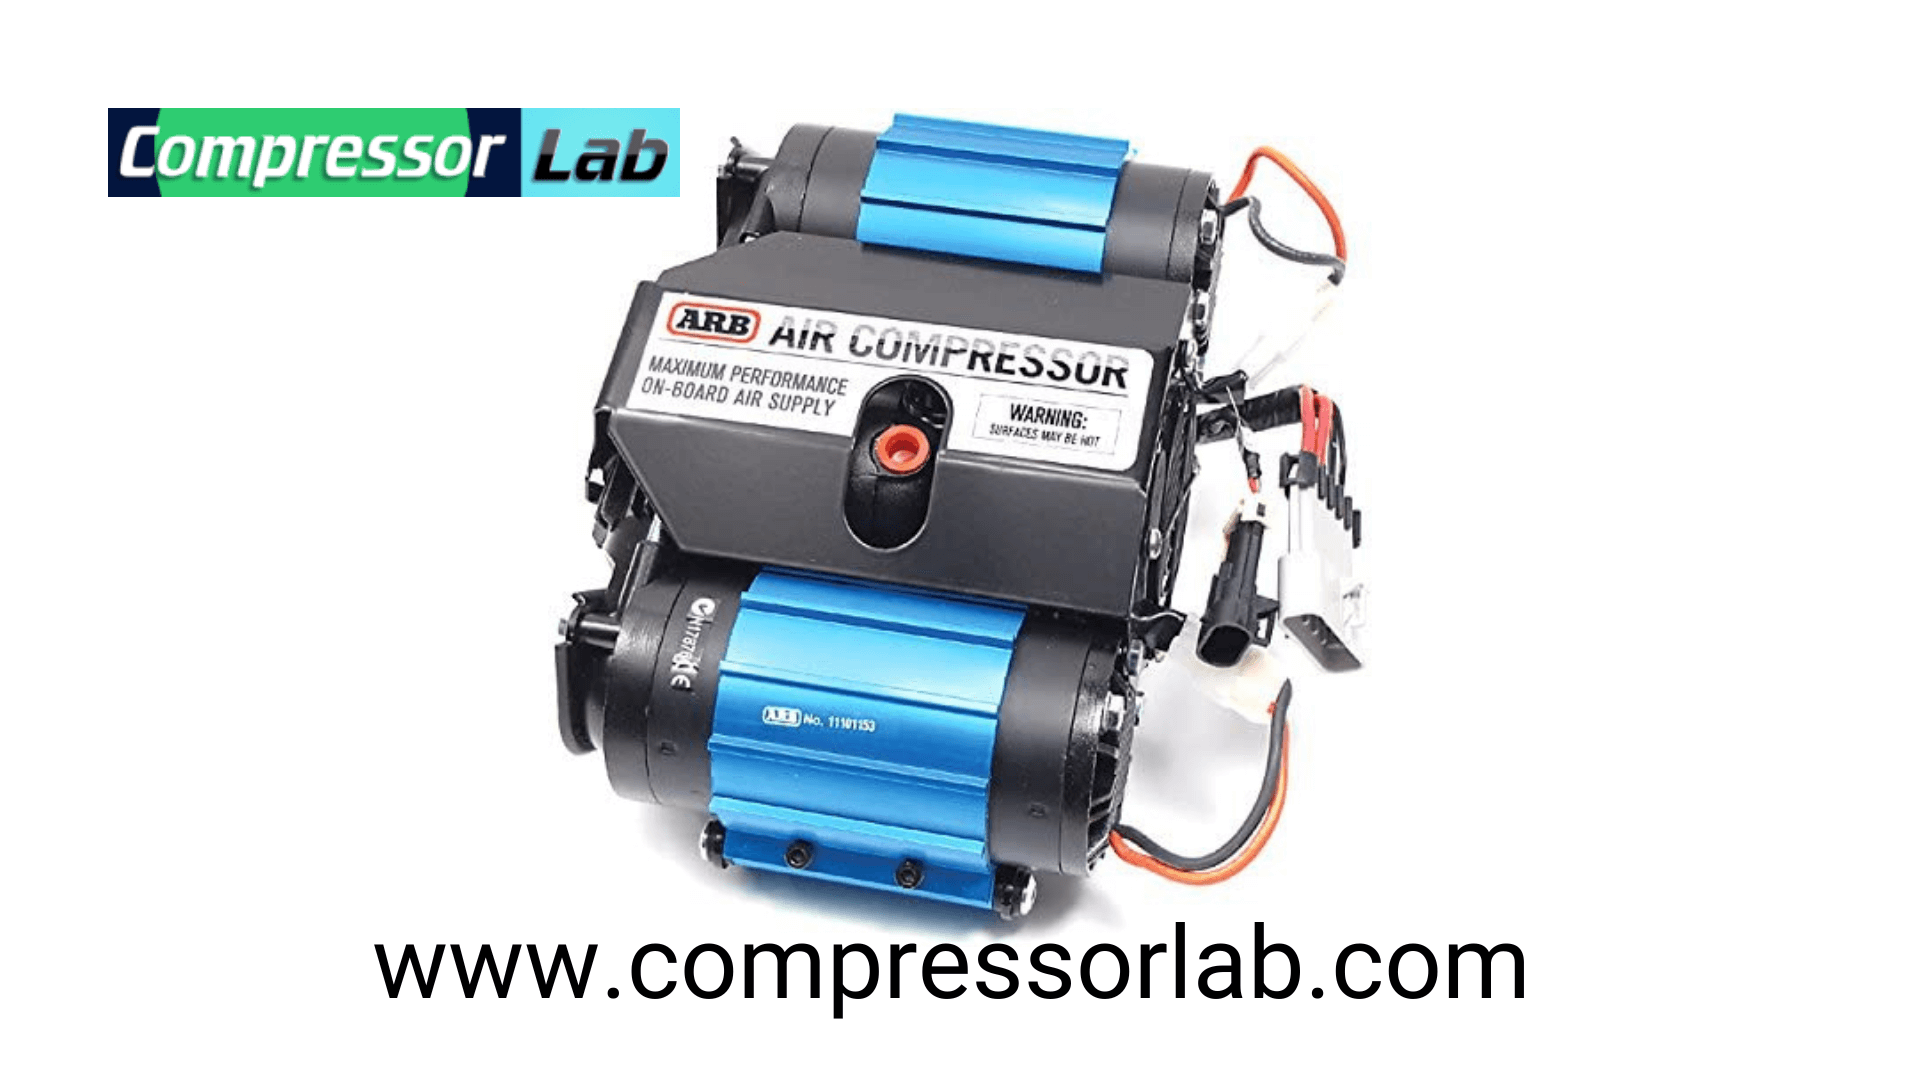 ARB CKMTA12 '12V' On-Board Twin High-Performance Air Compressor